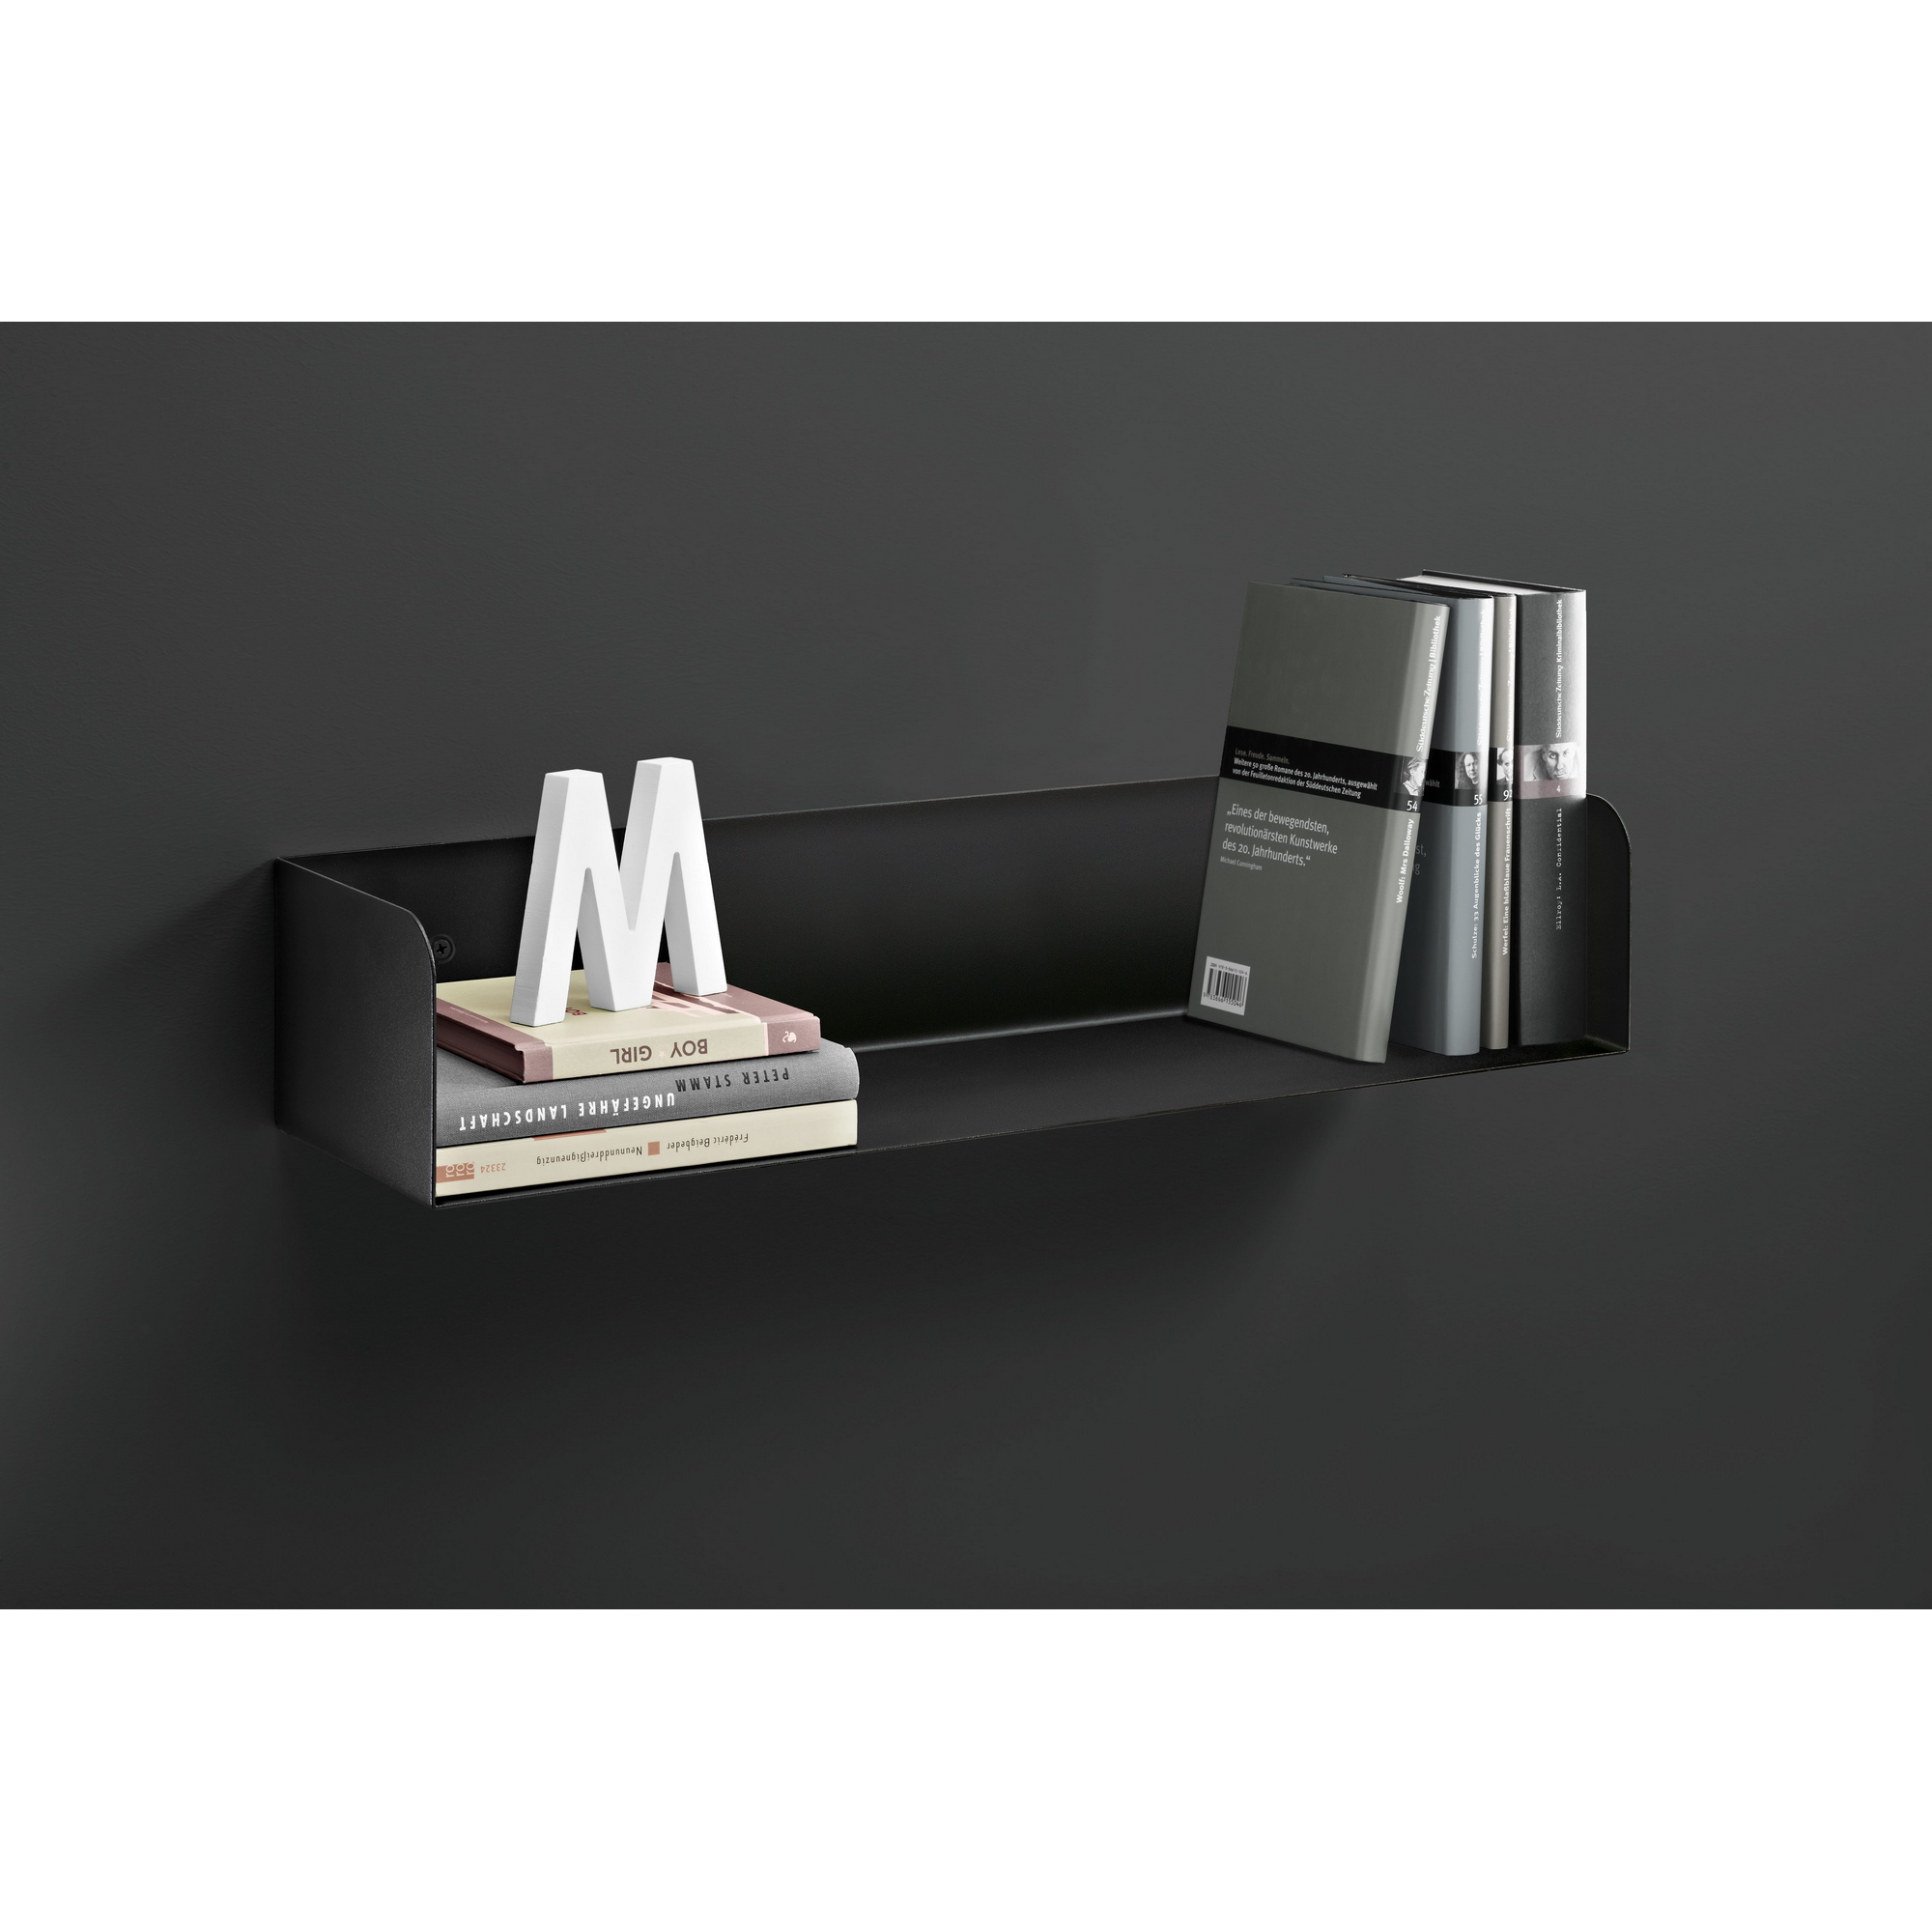 Wandregal 'Shelf+ Showcase' schwarz 800 x 150 x 115 mm + product picture